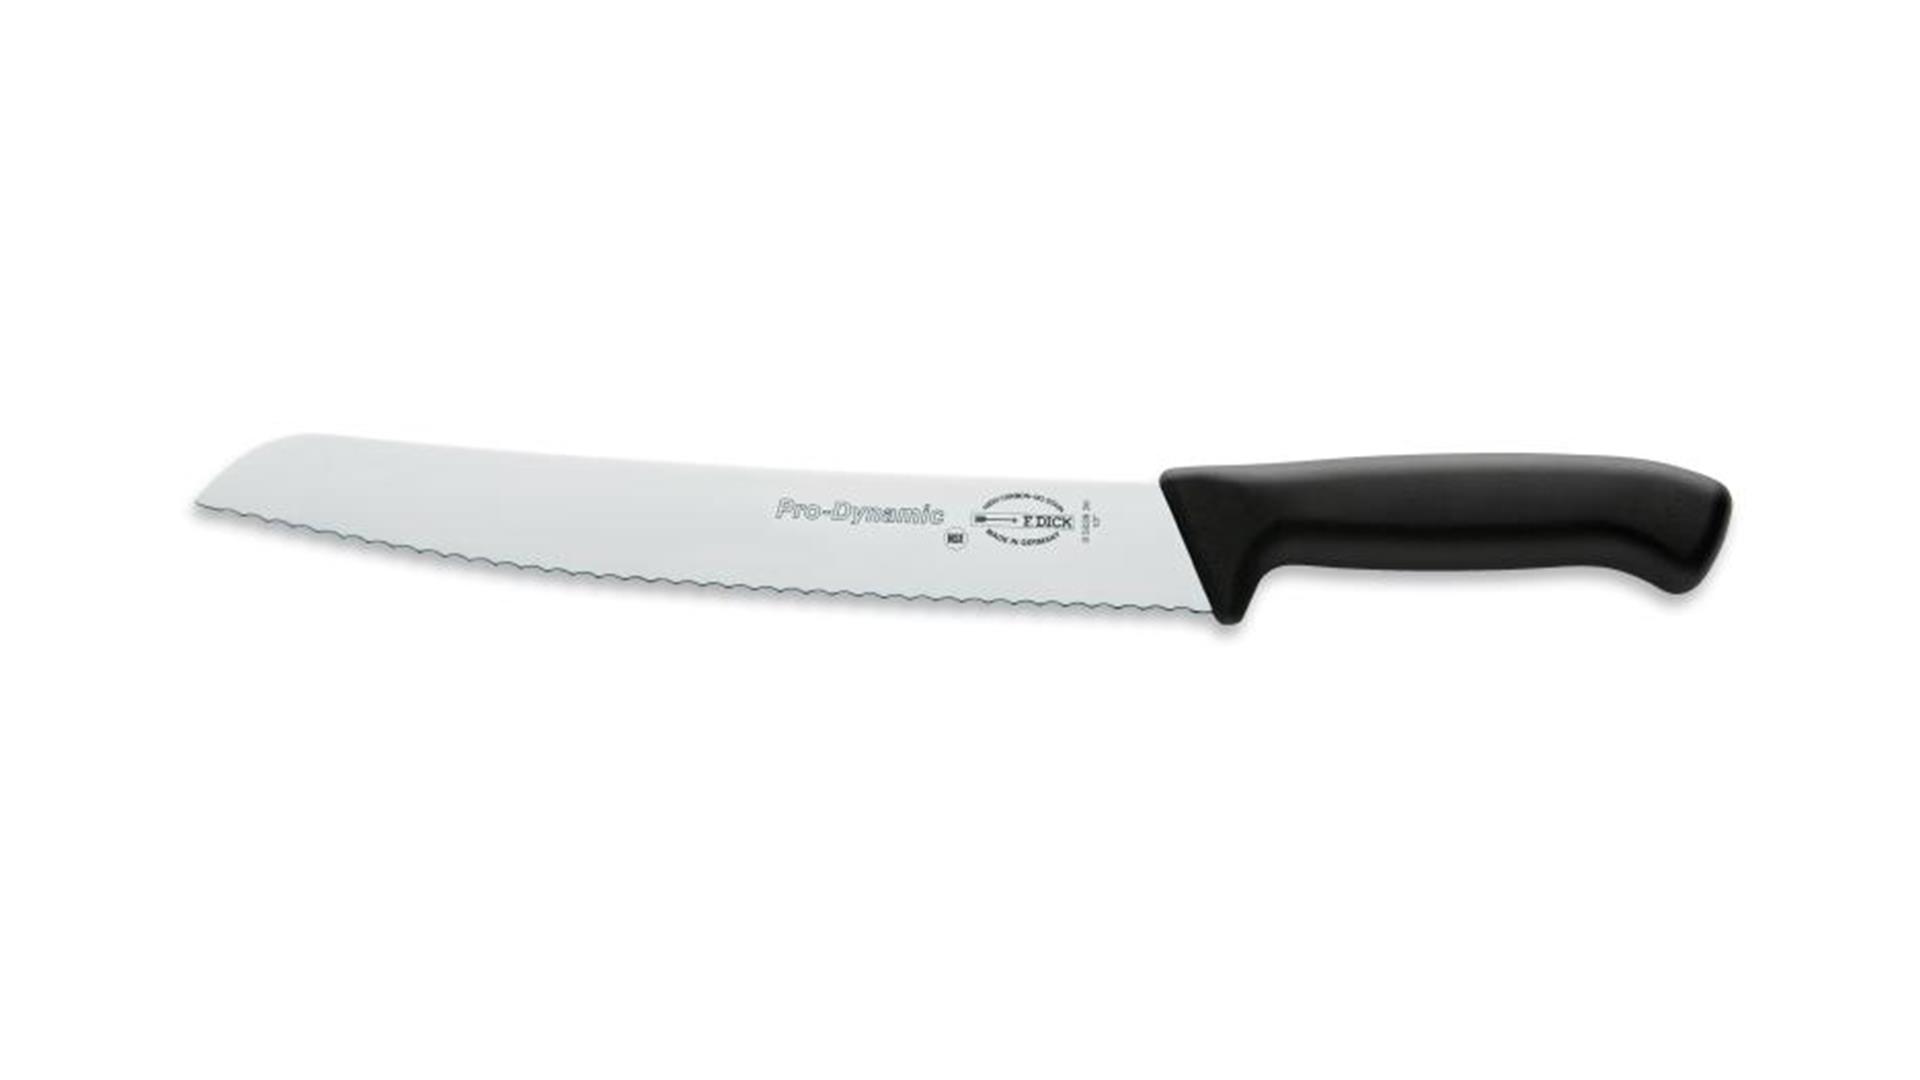 Bread knife 26cm SB C+C Pro Dynamic